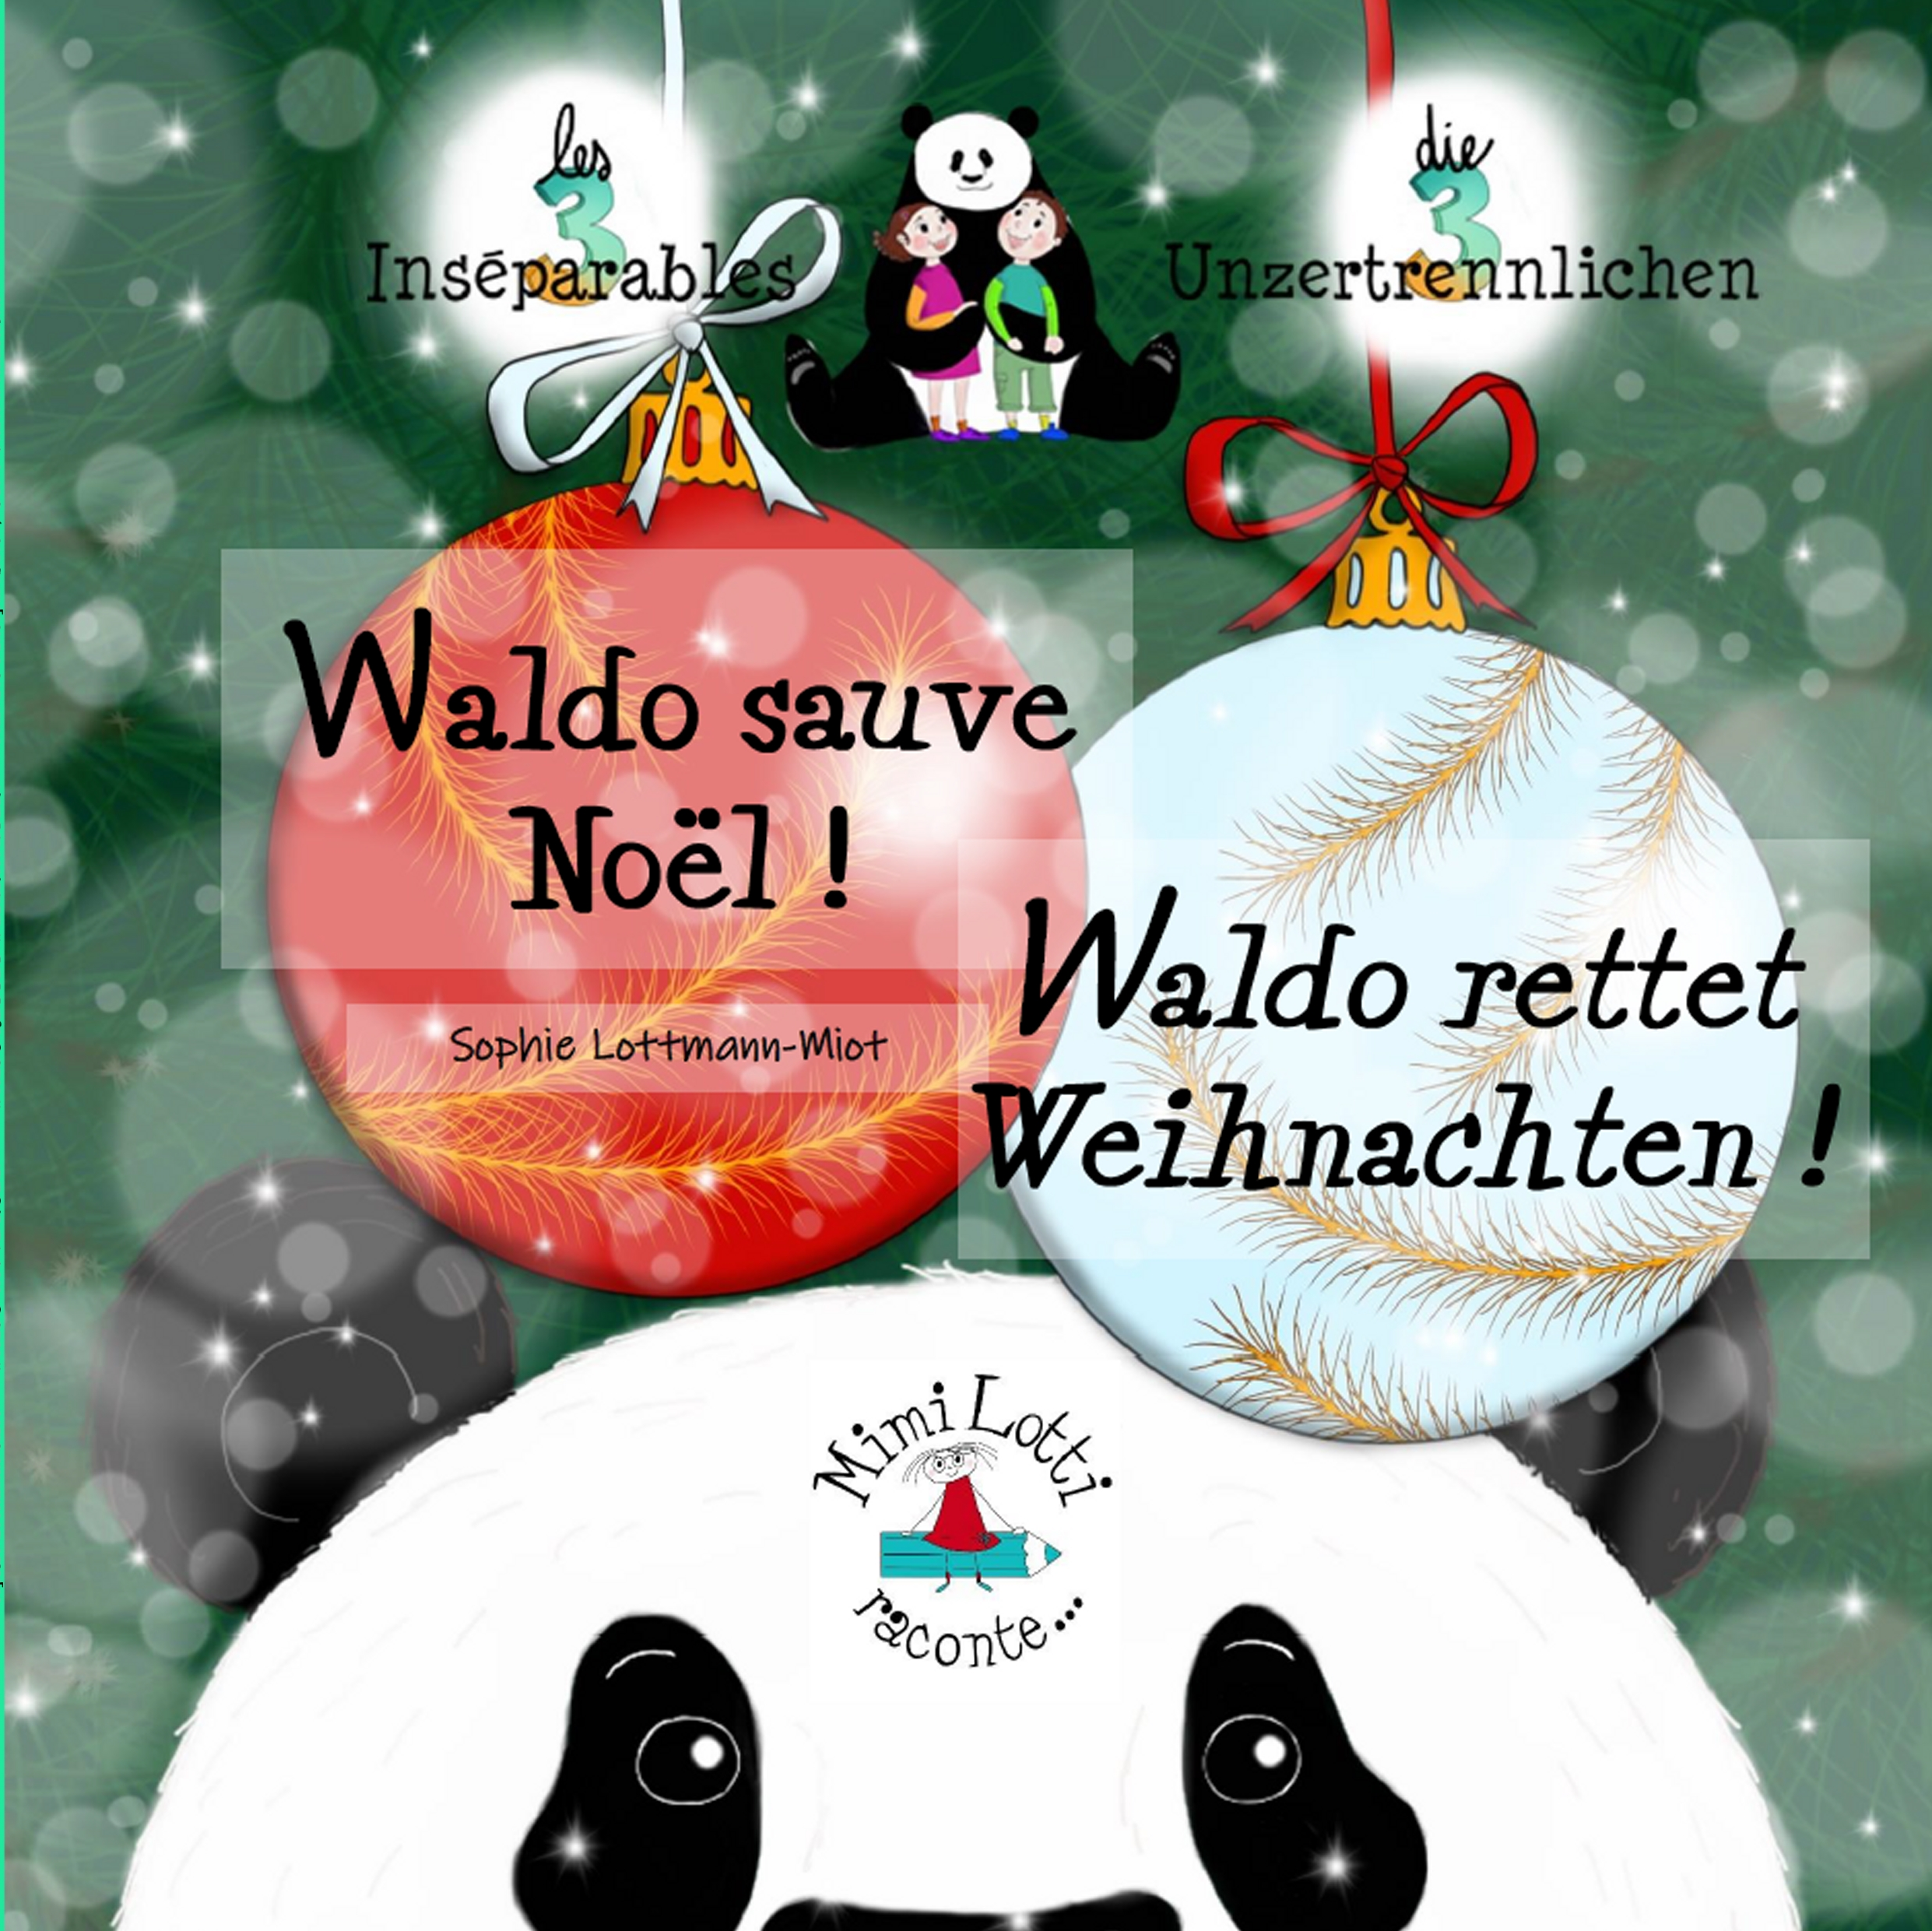 Waldo sauve Noël!